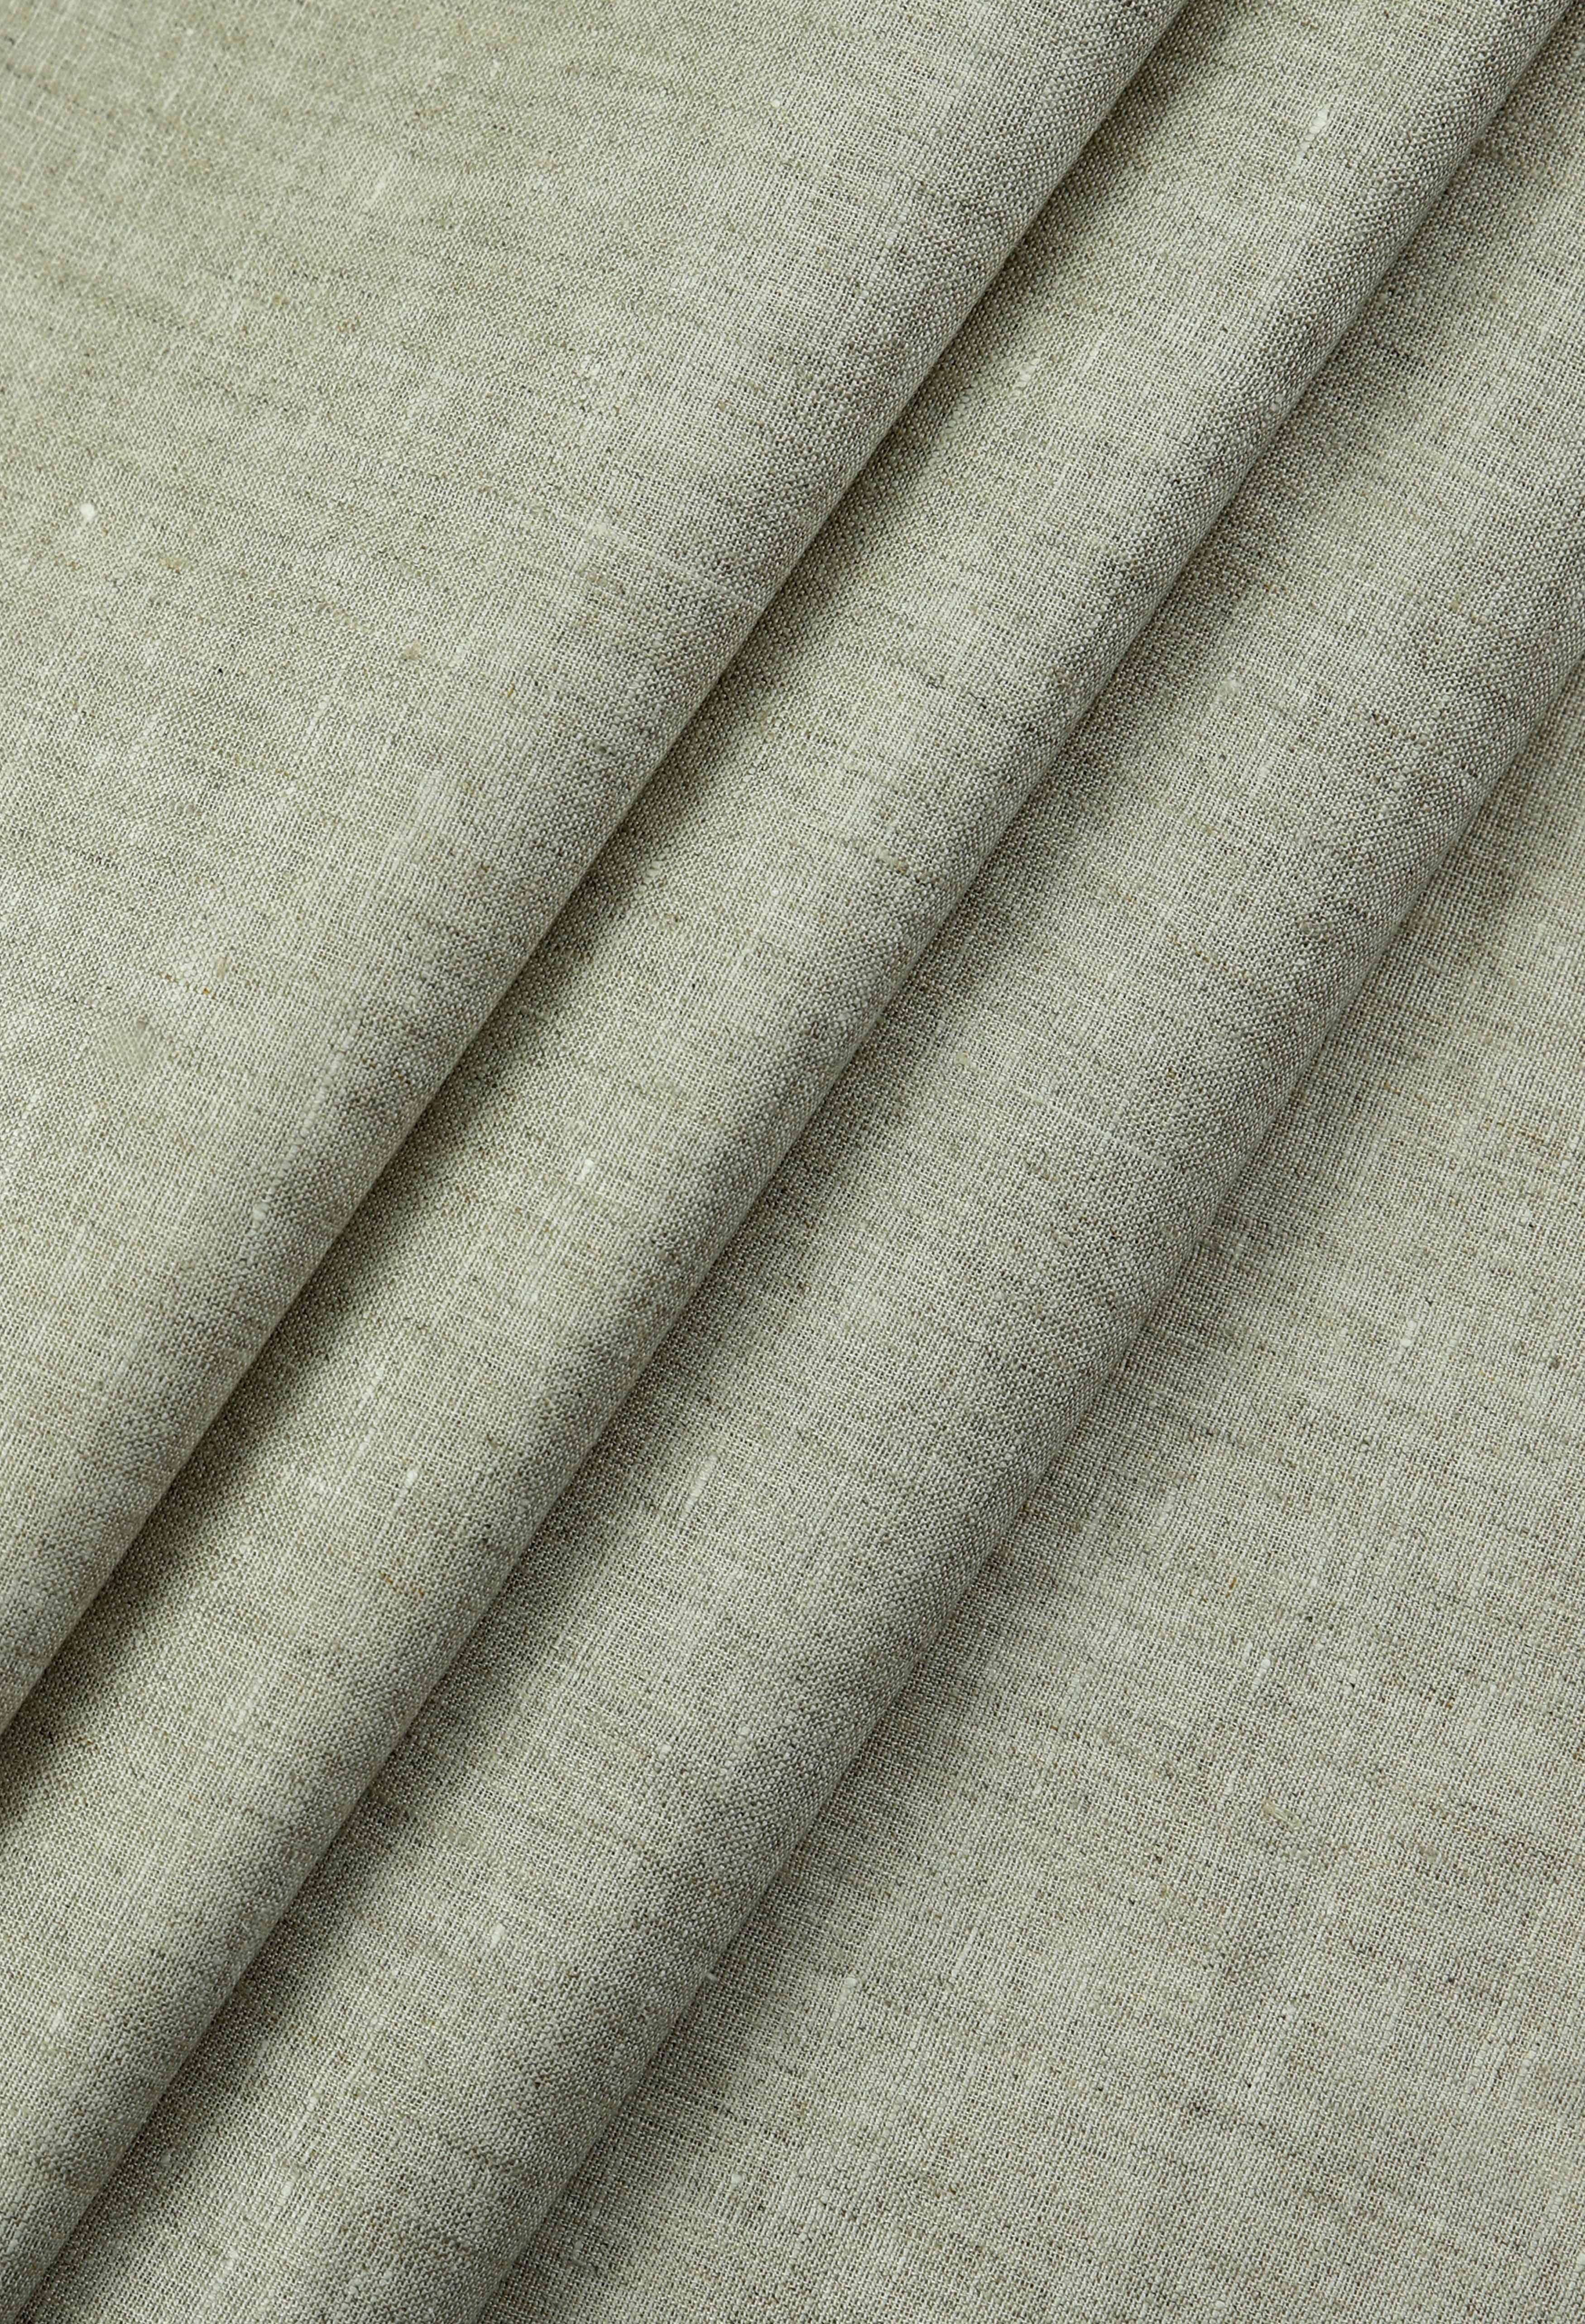 Tan Brown Linen